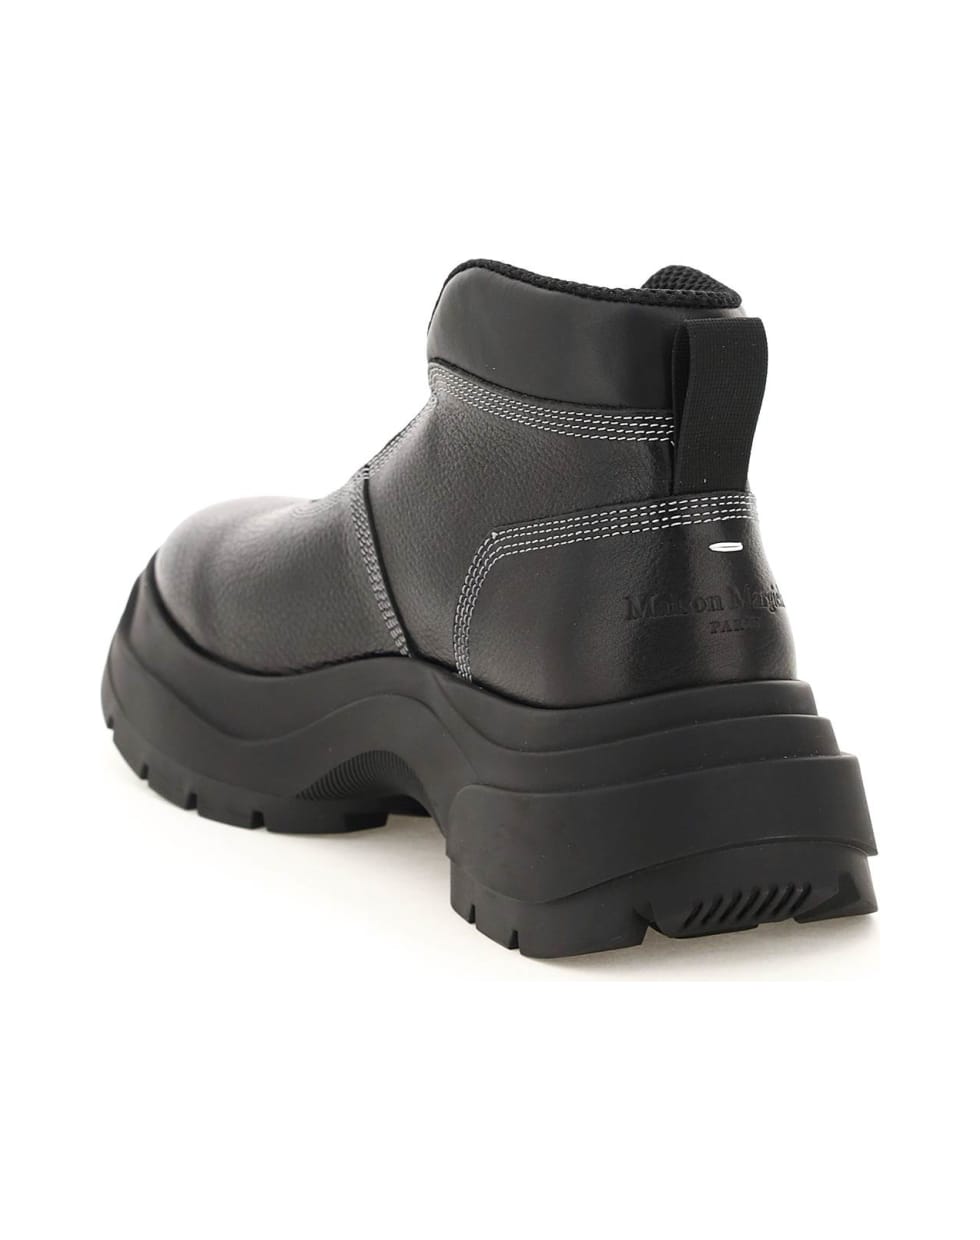 Maison Margiela Slip On Leather Sneakers - Black